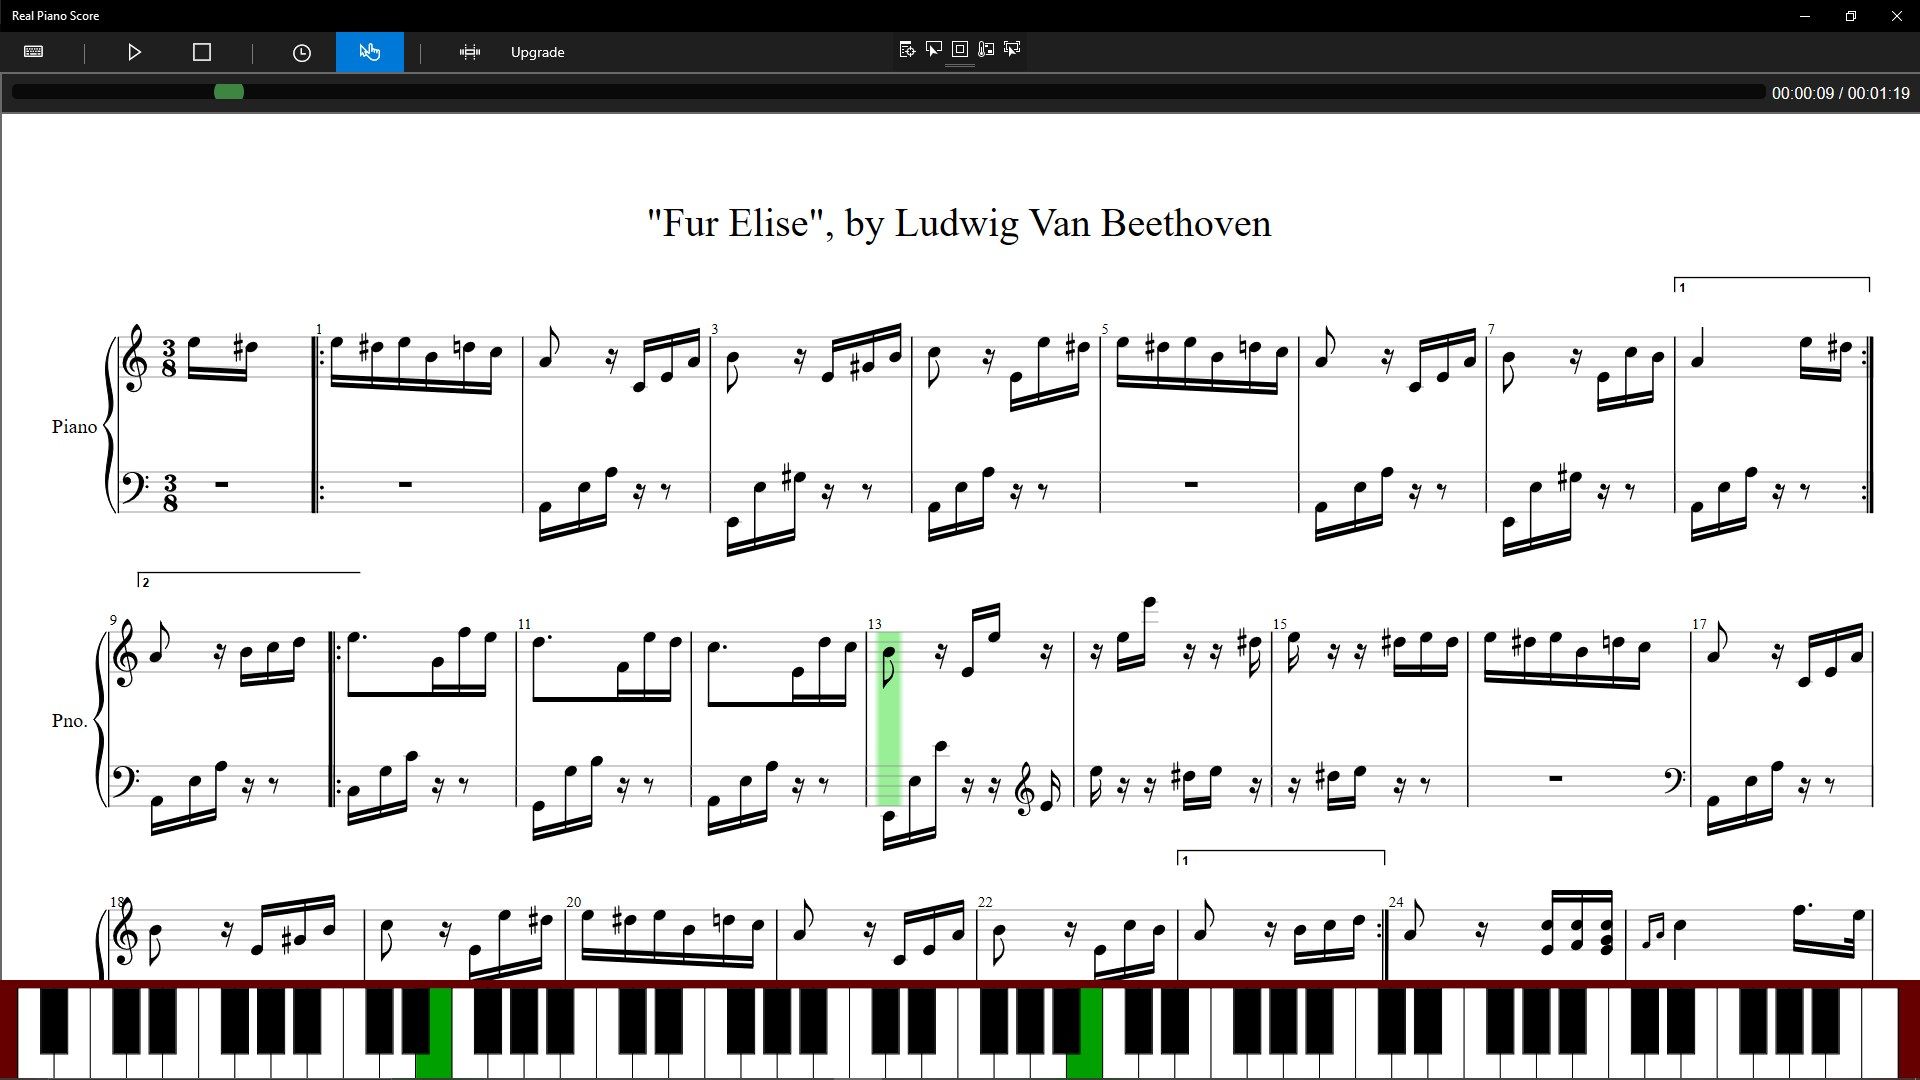 Real Piano Score